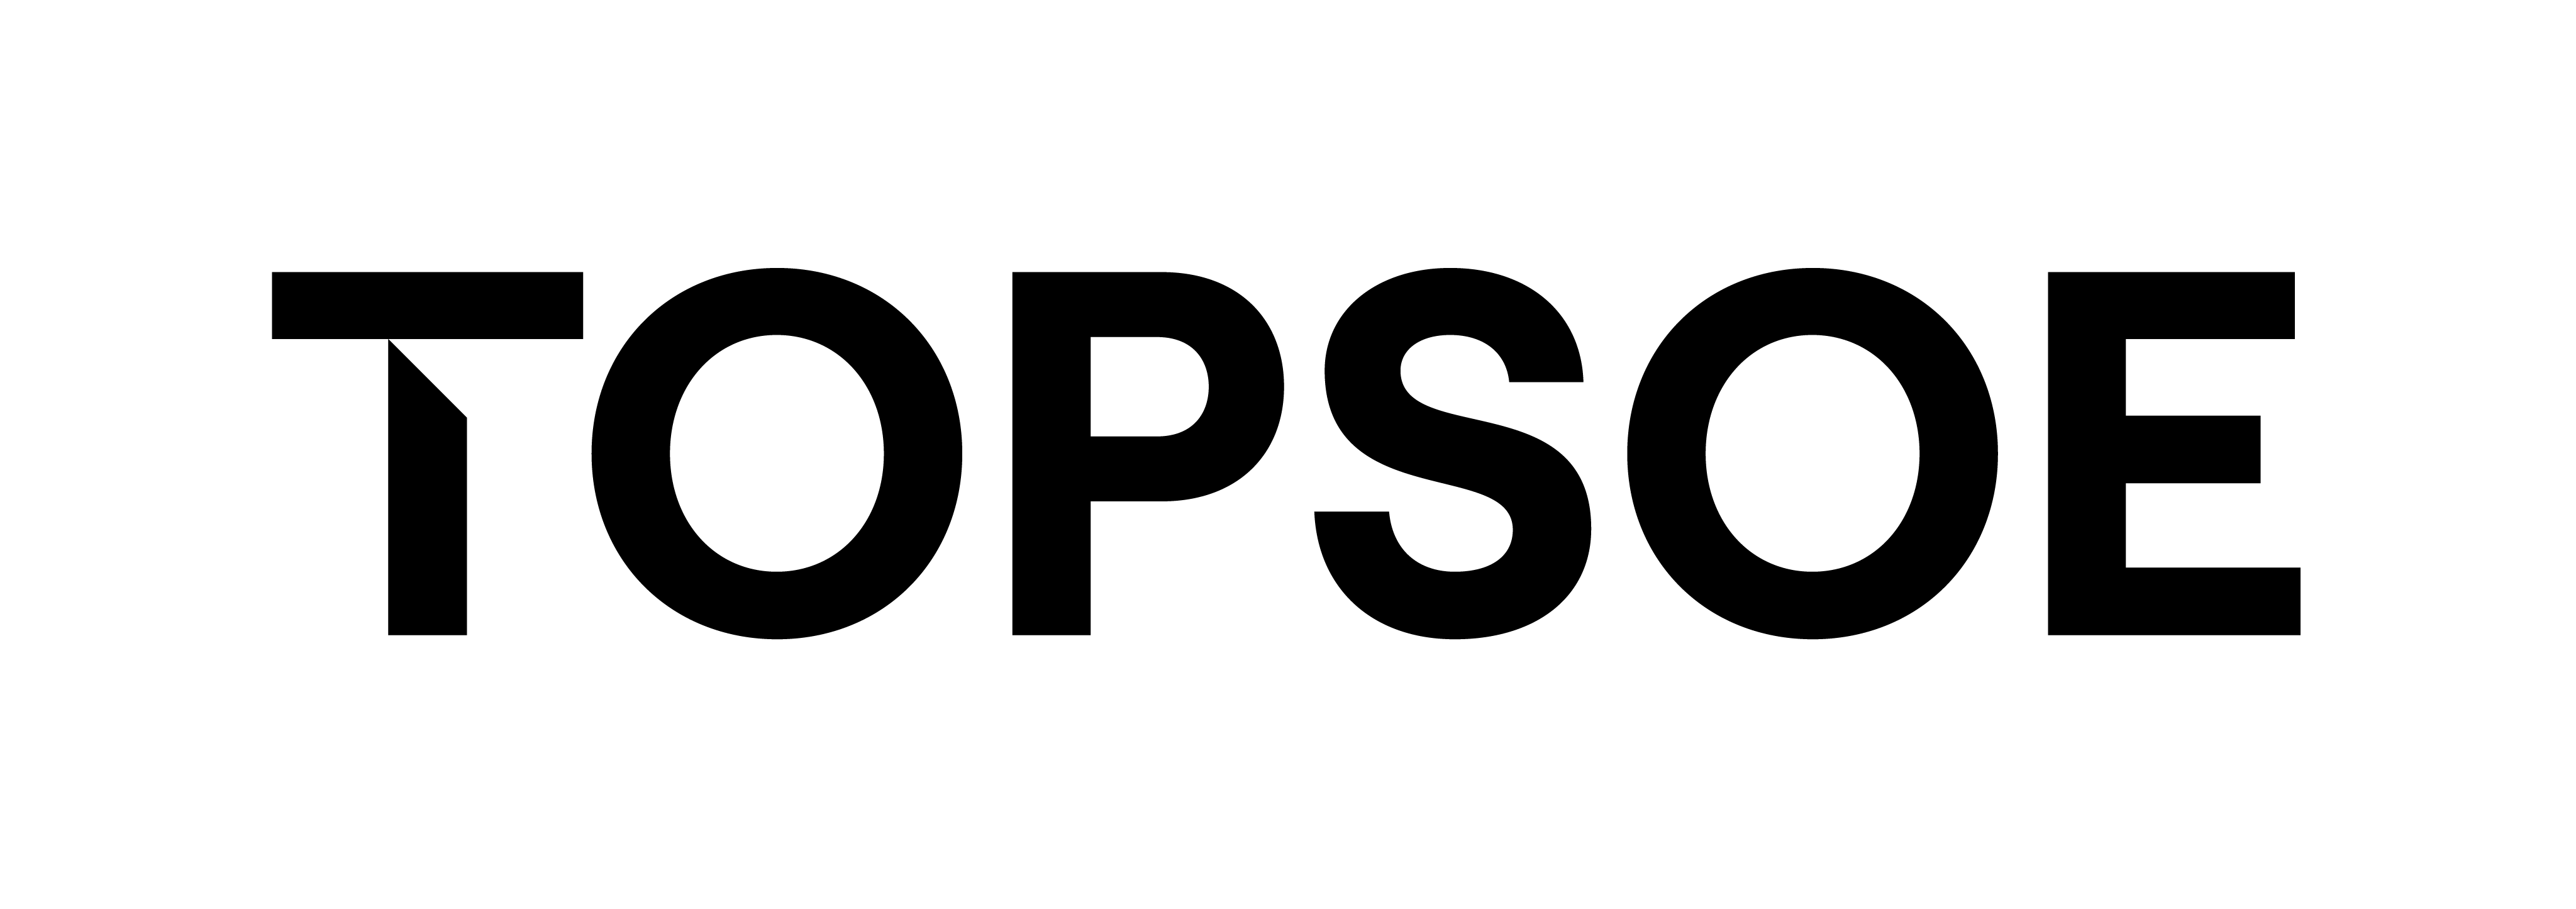 Topsoe_Logotype_RGB_Positive.png